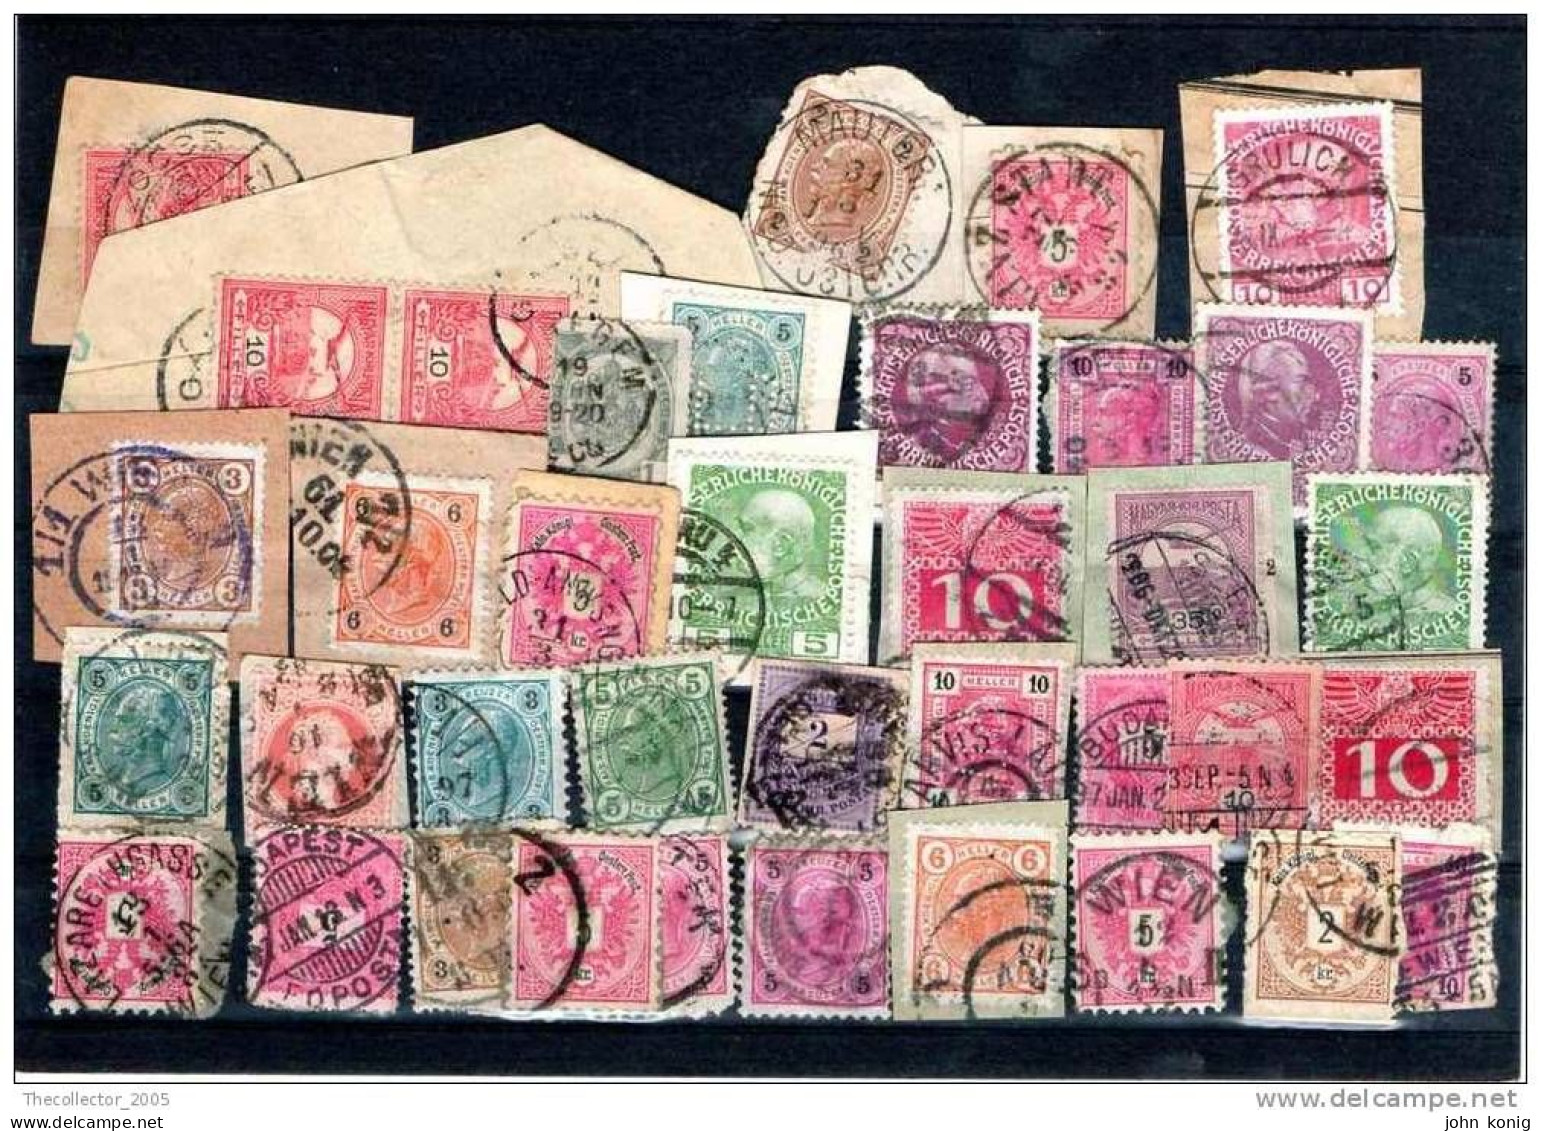 Ungheria Hungary Magyar Posta - Stamps Lot Used - Gestempelt - Francobolli Lotto Usati - Verzamelingen